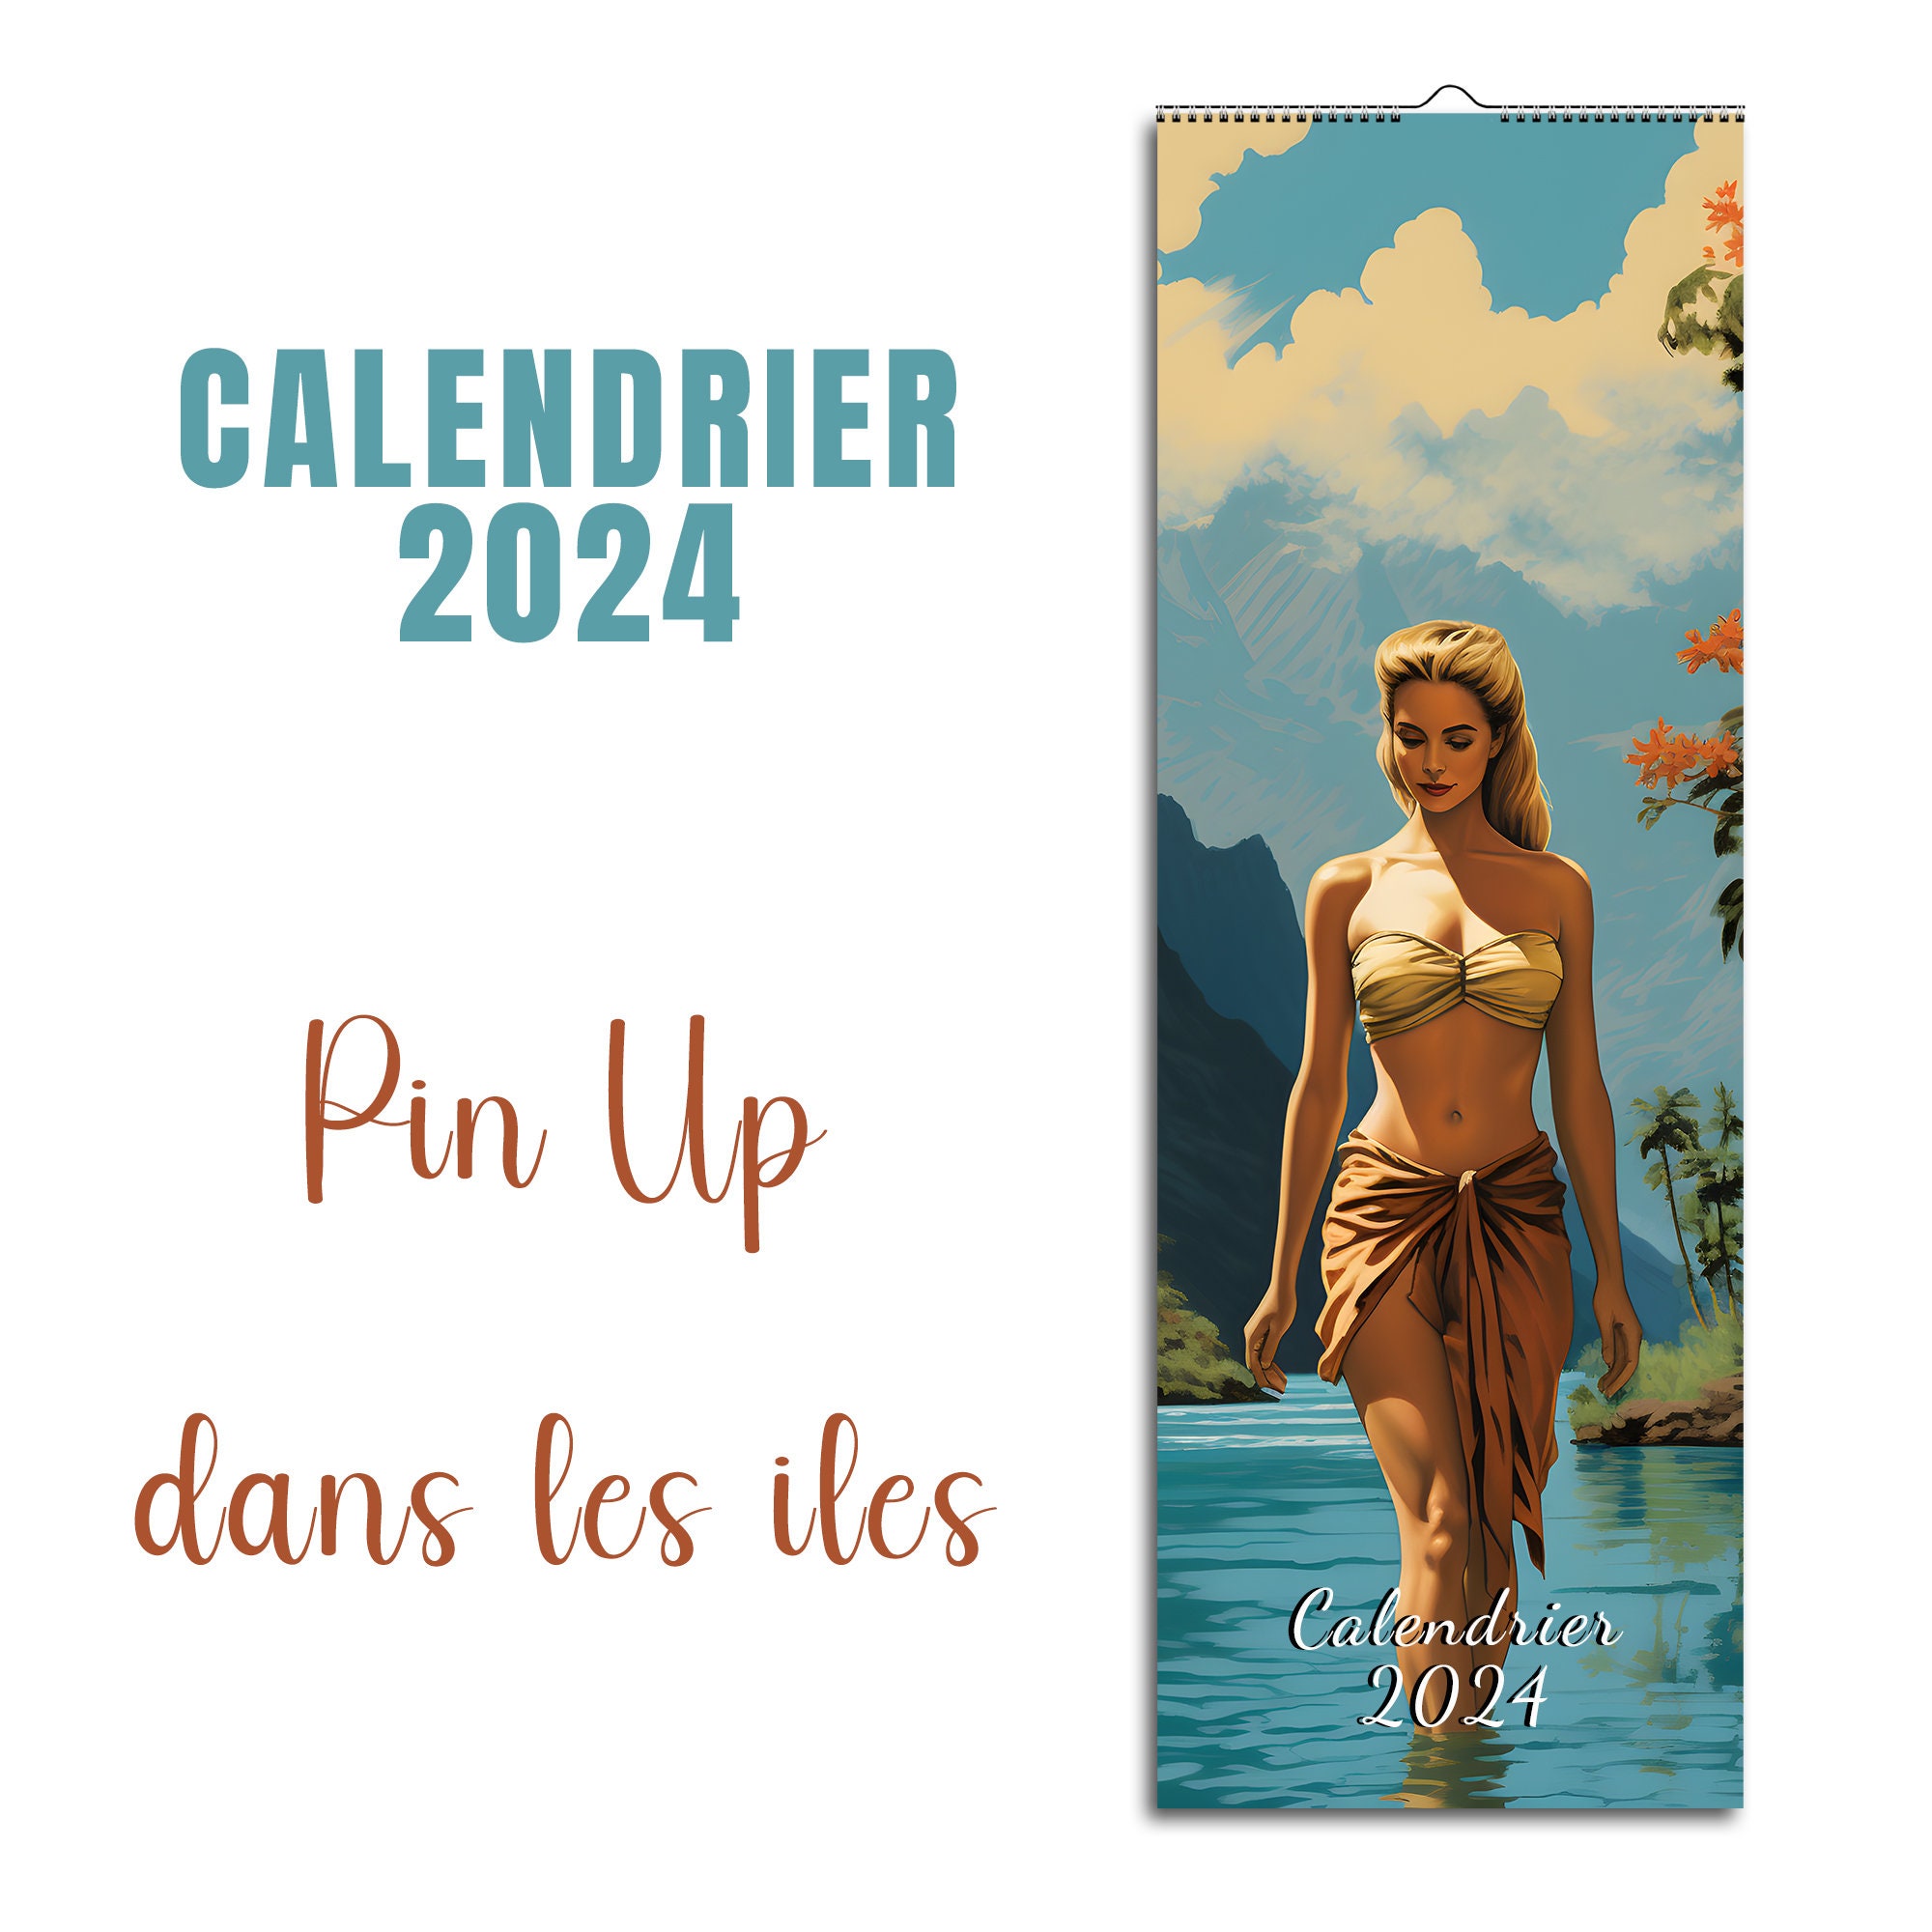 CALENDRIER EROTIQUE SEXY - Calendrier - Calendrier 2024 Pin Up